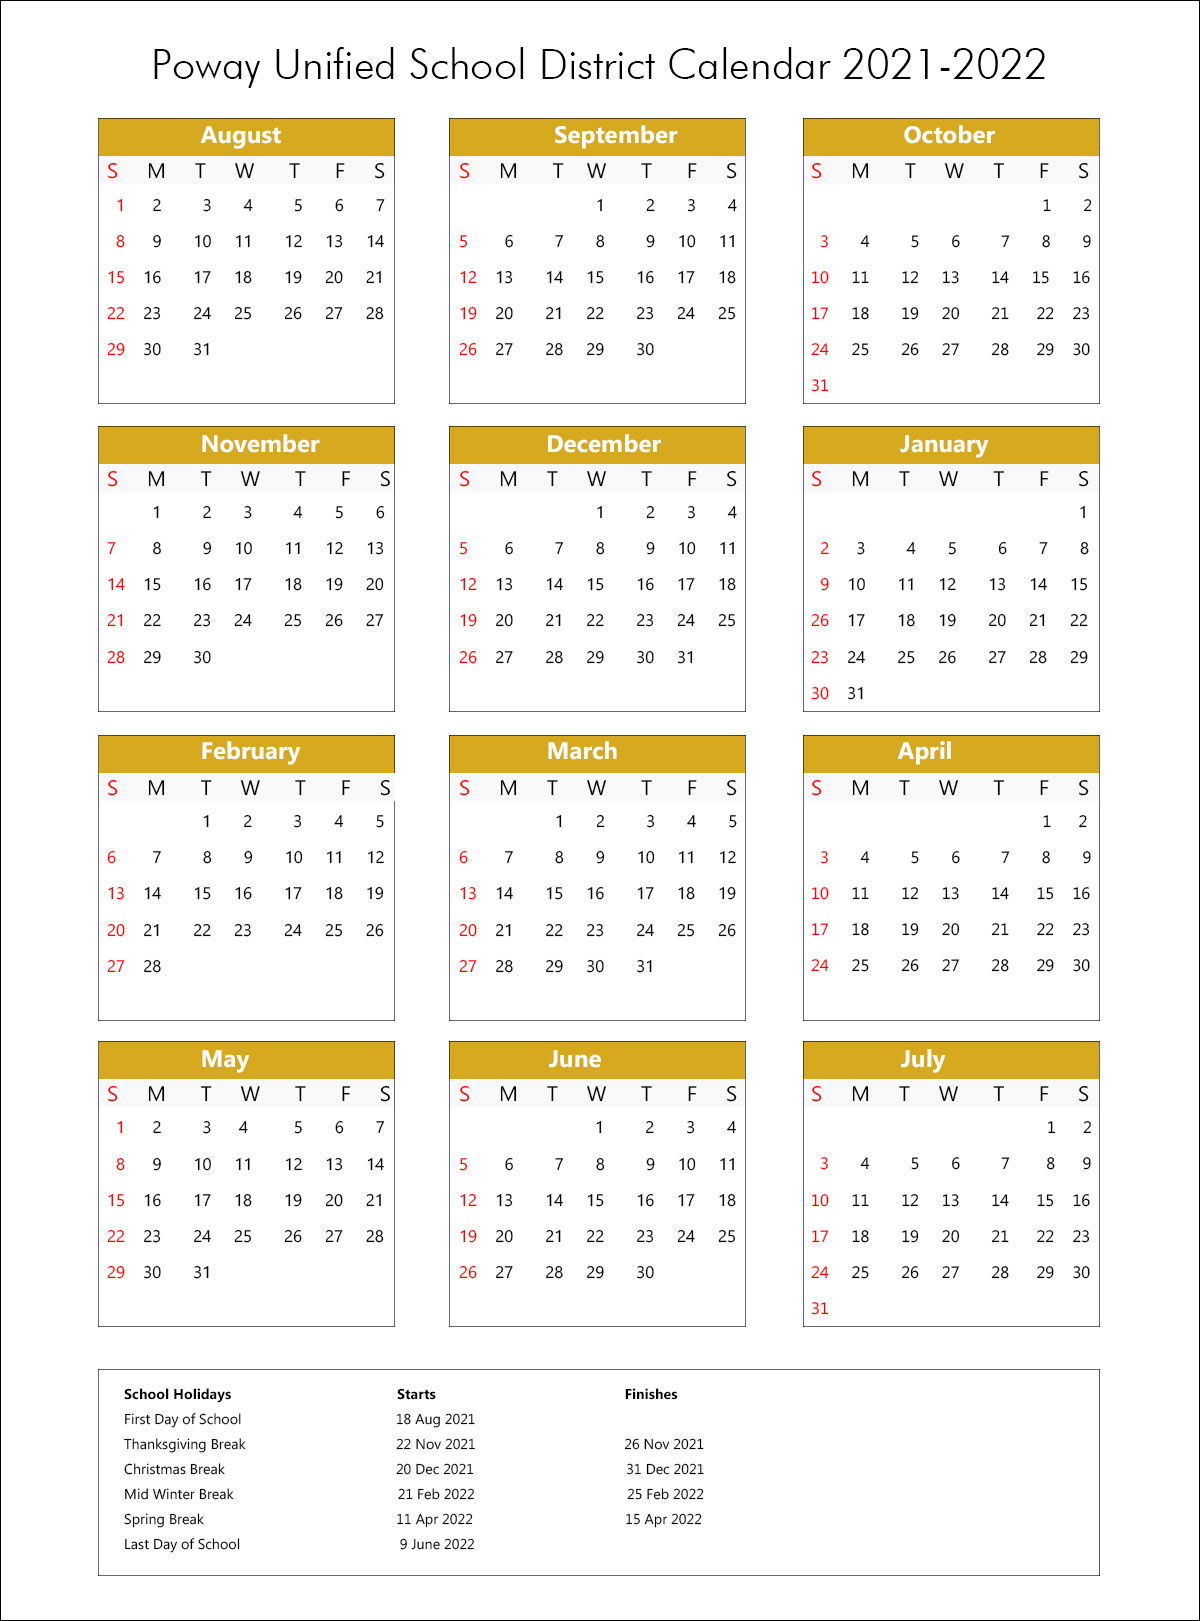 Poway Unified School District Calendar 2021